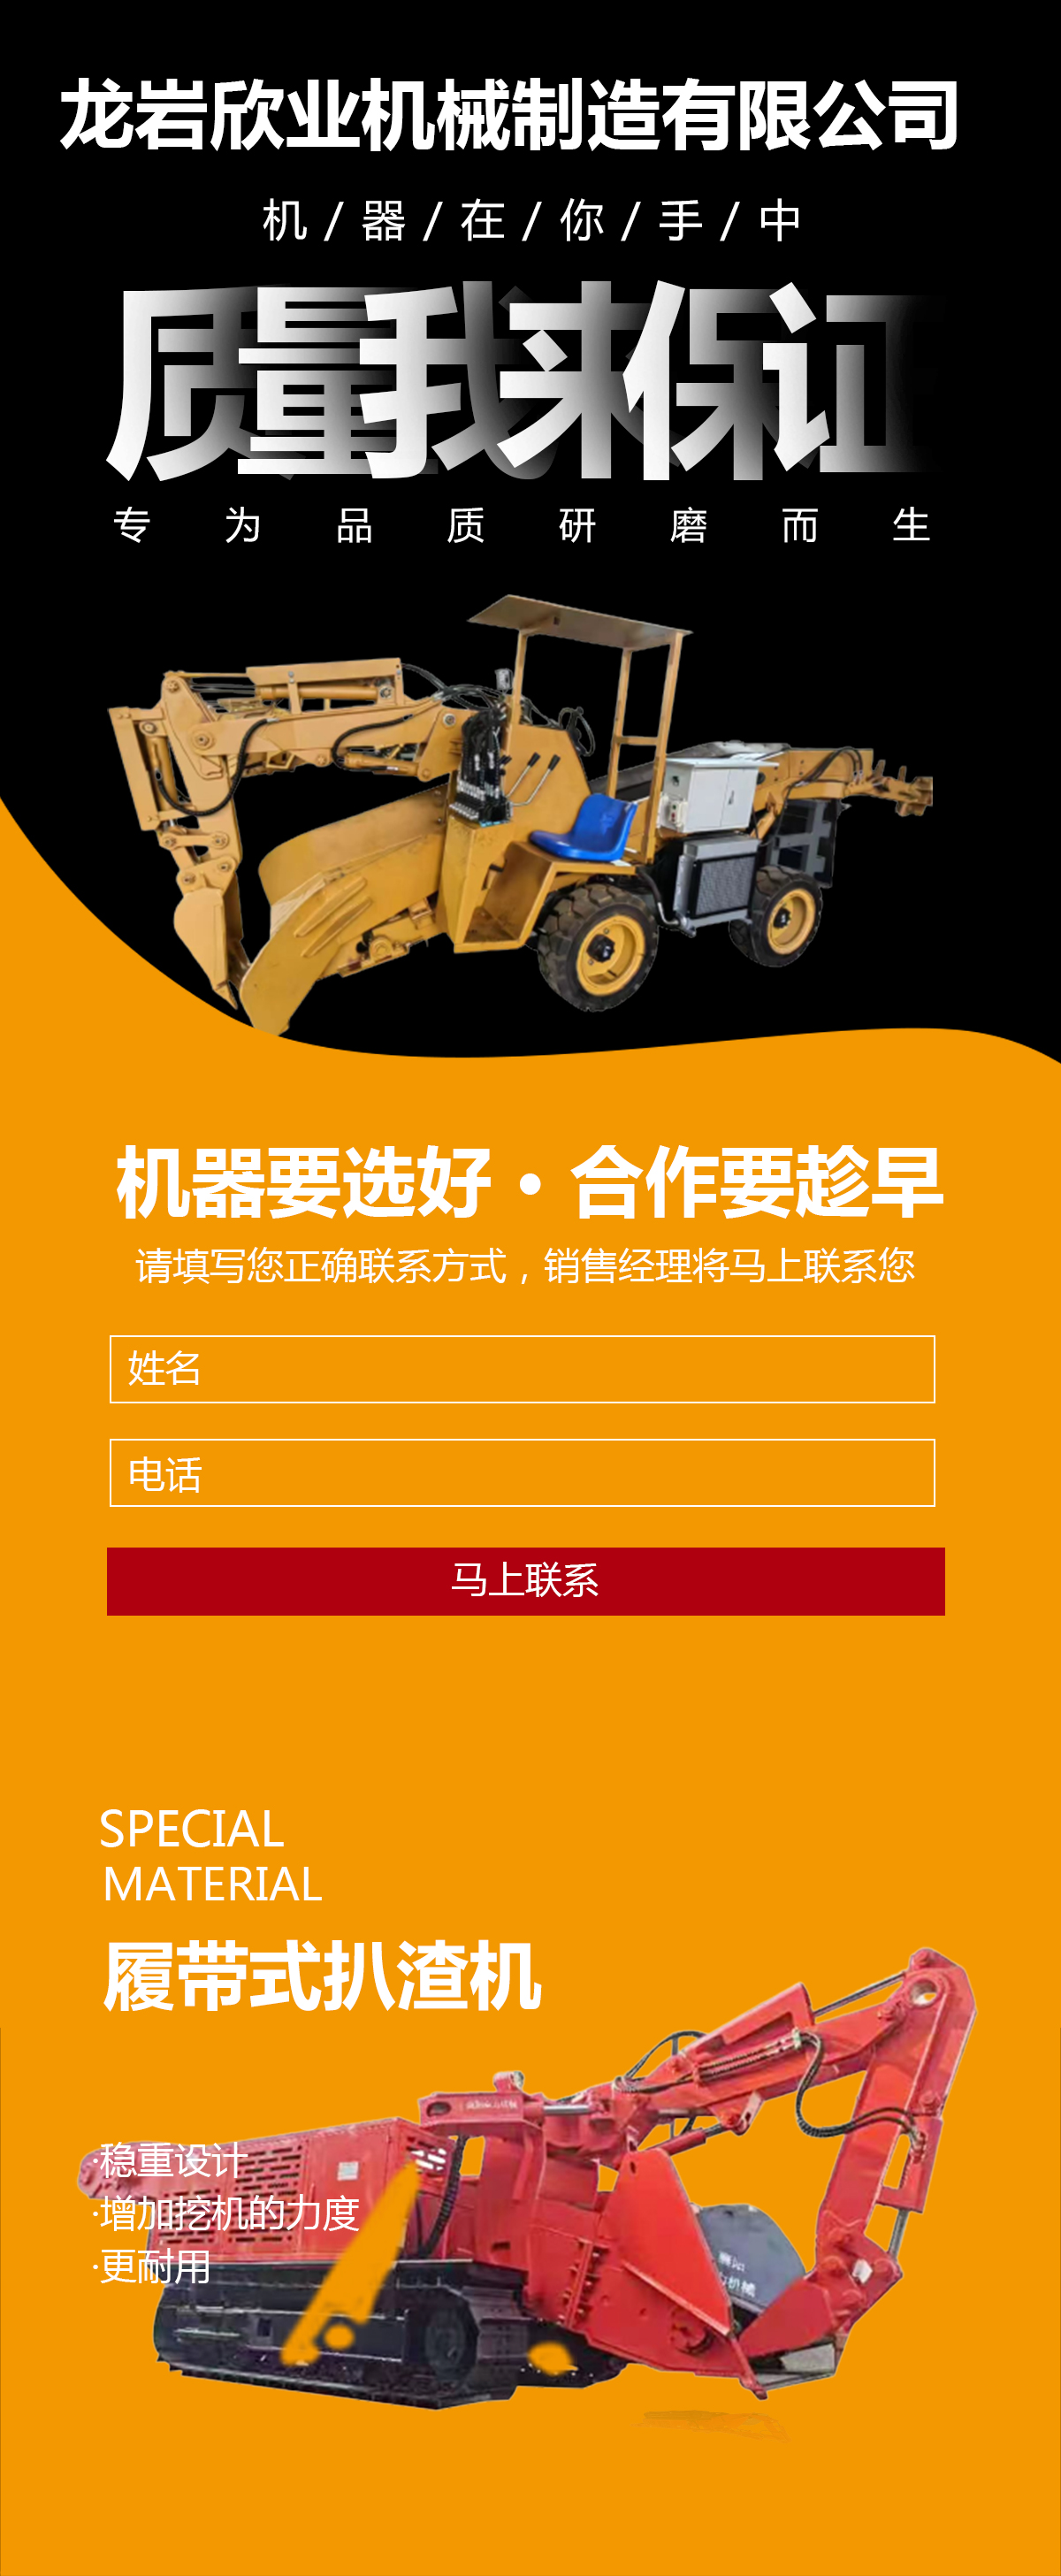 Fujian manufacturer provides MYTx1060 sawdust cylindrical sieve, screening machine, mining machinery